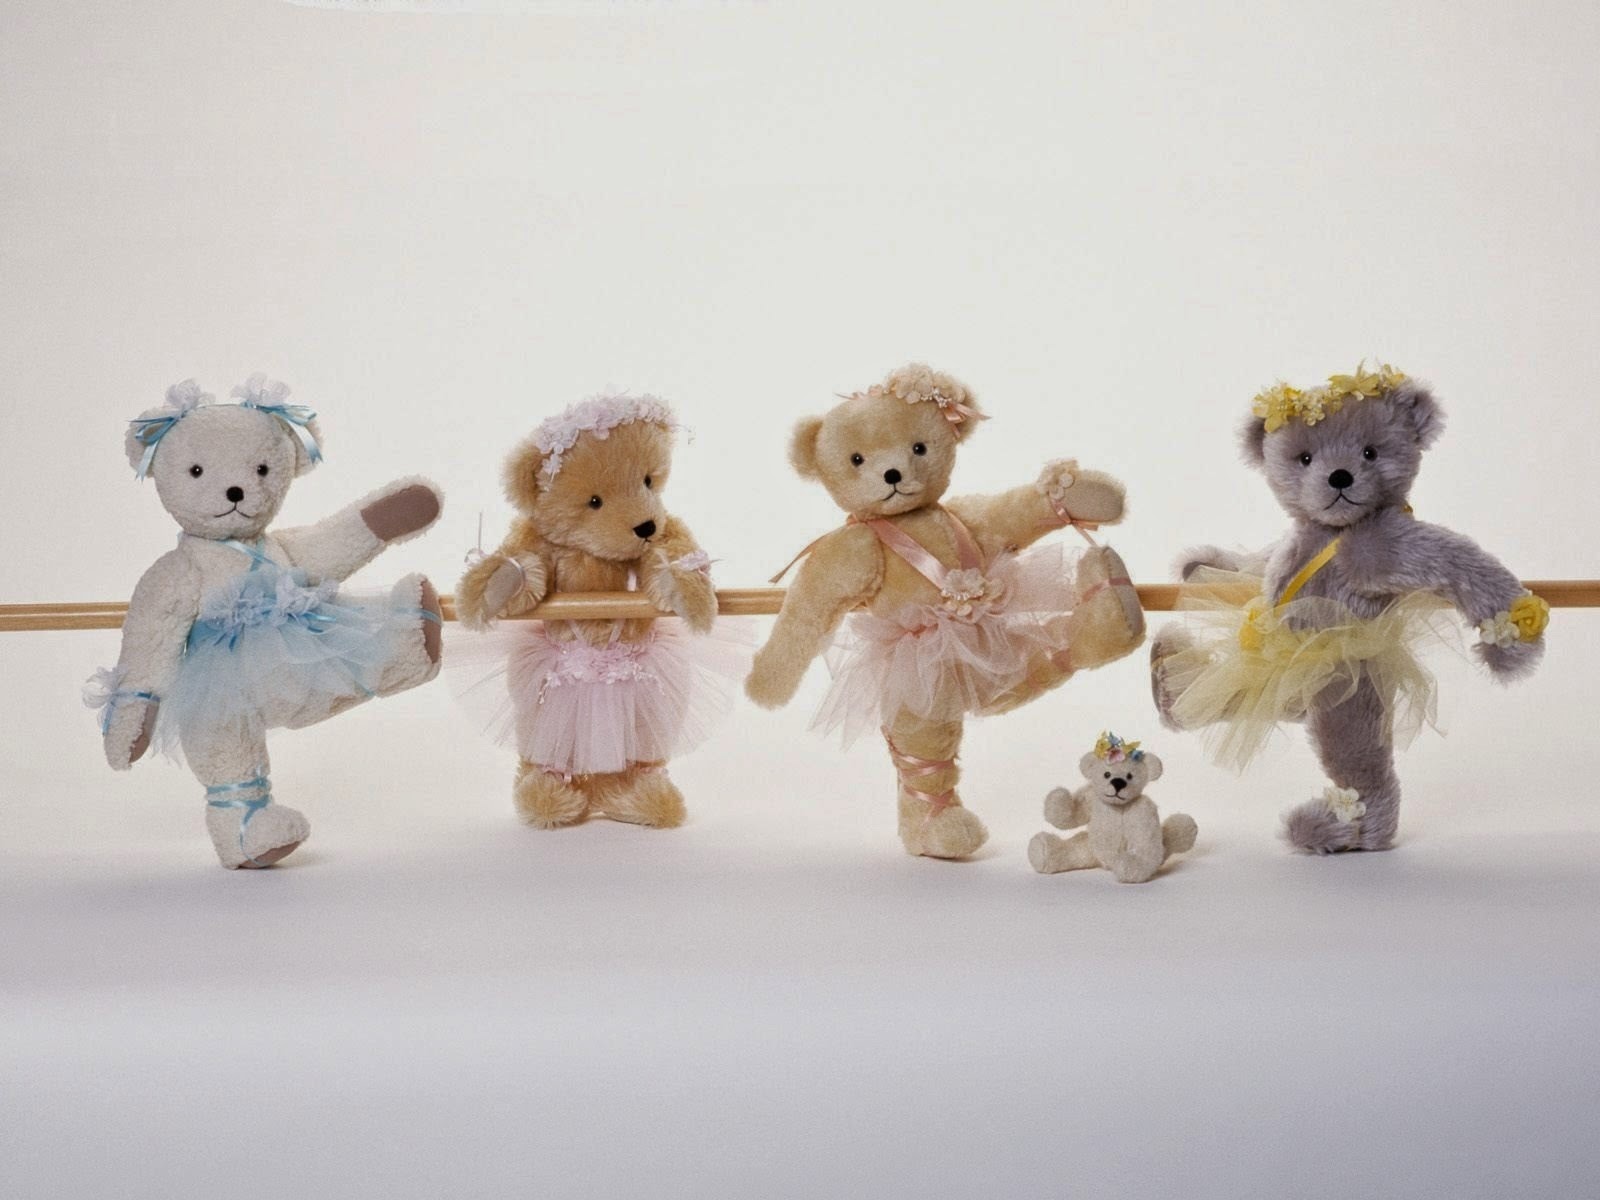 Cute Teddy Bear Wallpaper For Little Kids And Children From A Friend